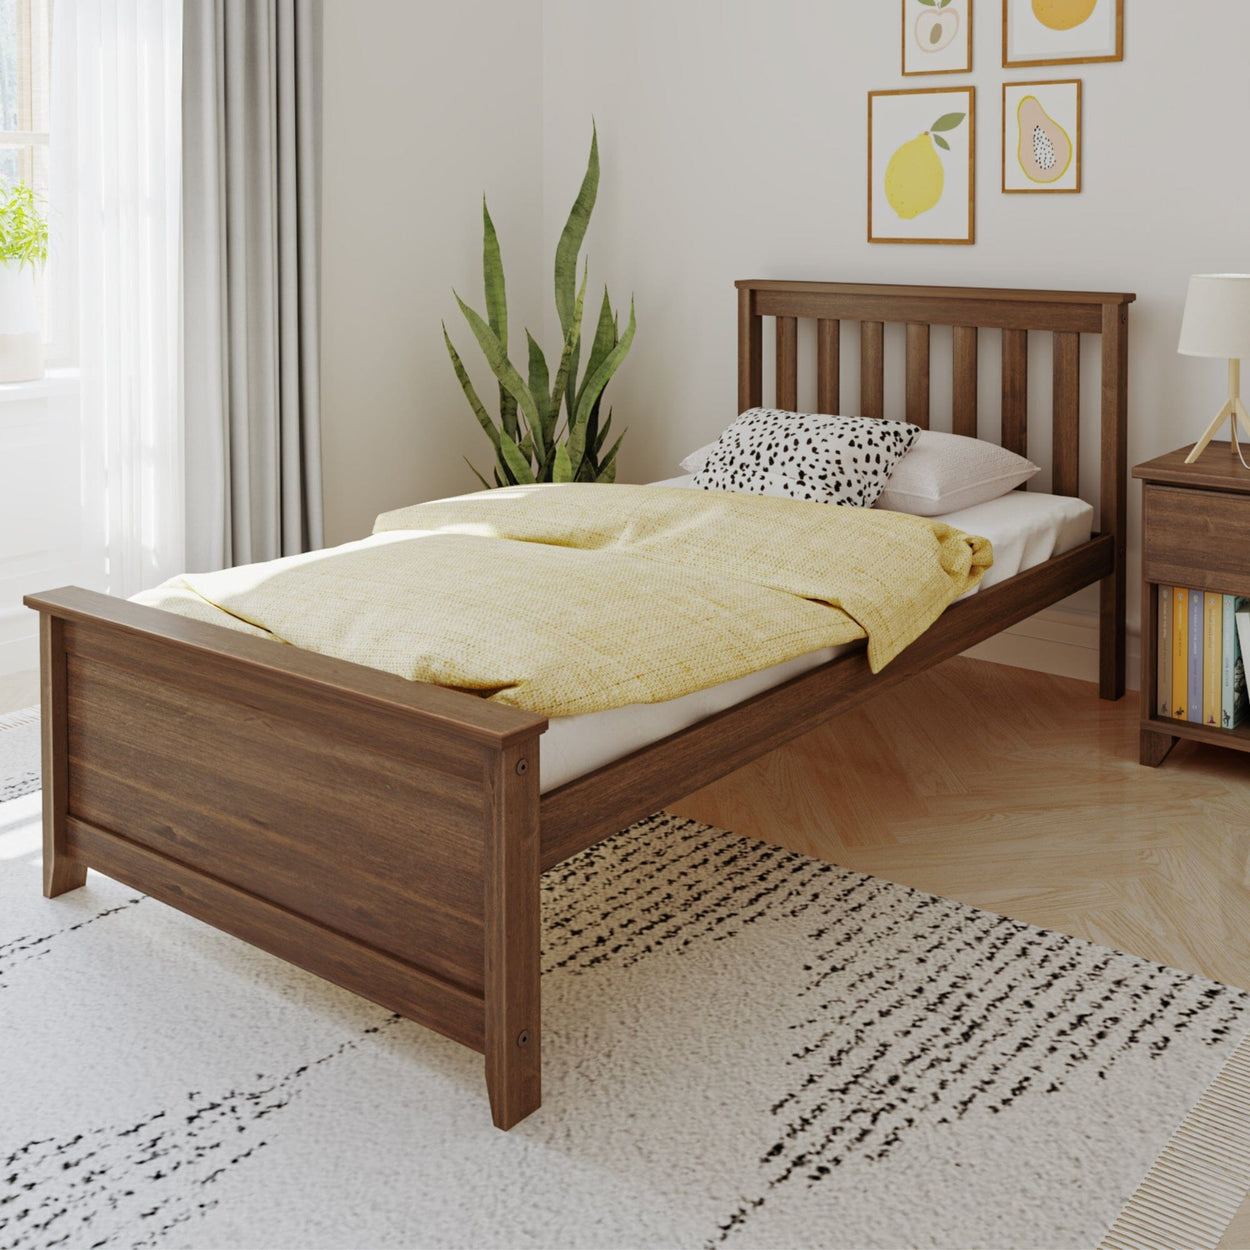 180210-008 : Kids Beds Classic Twin-Size Platform Bed, Walnut